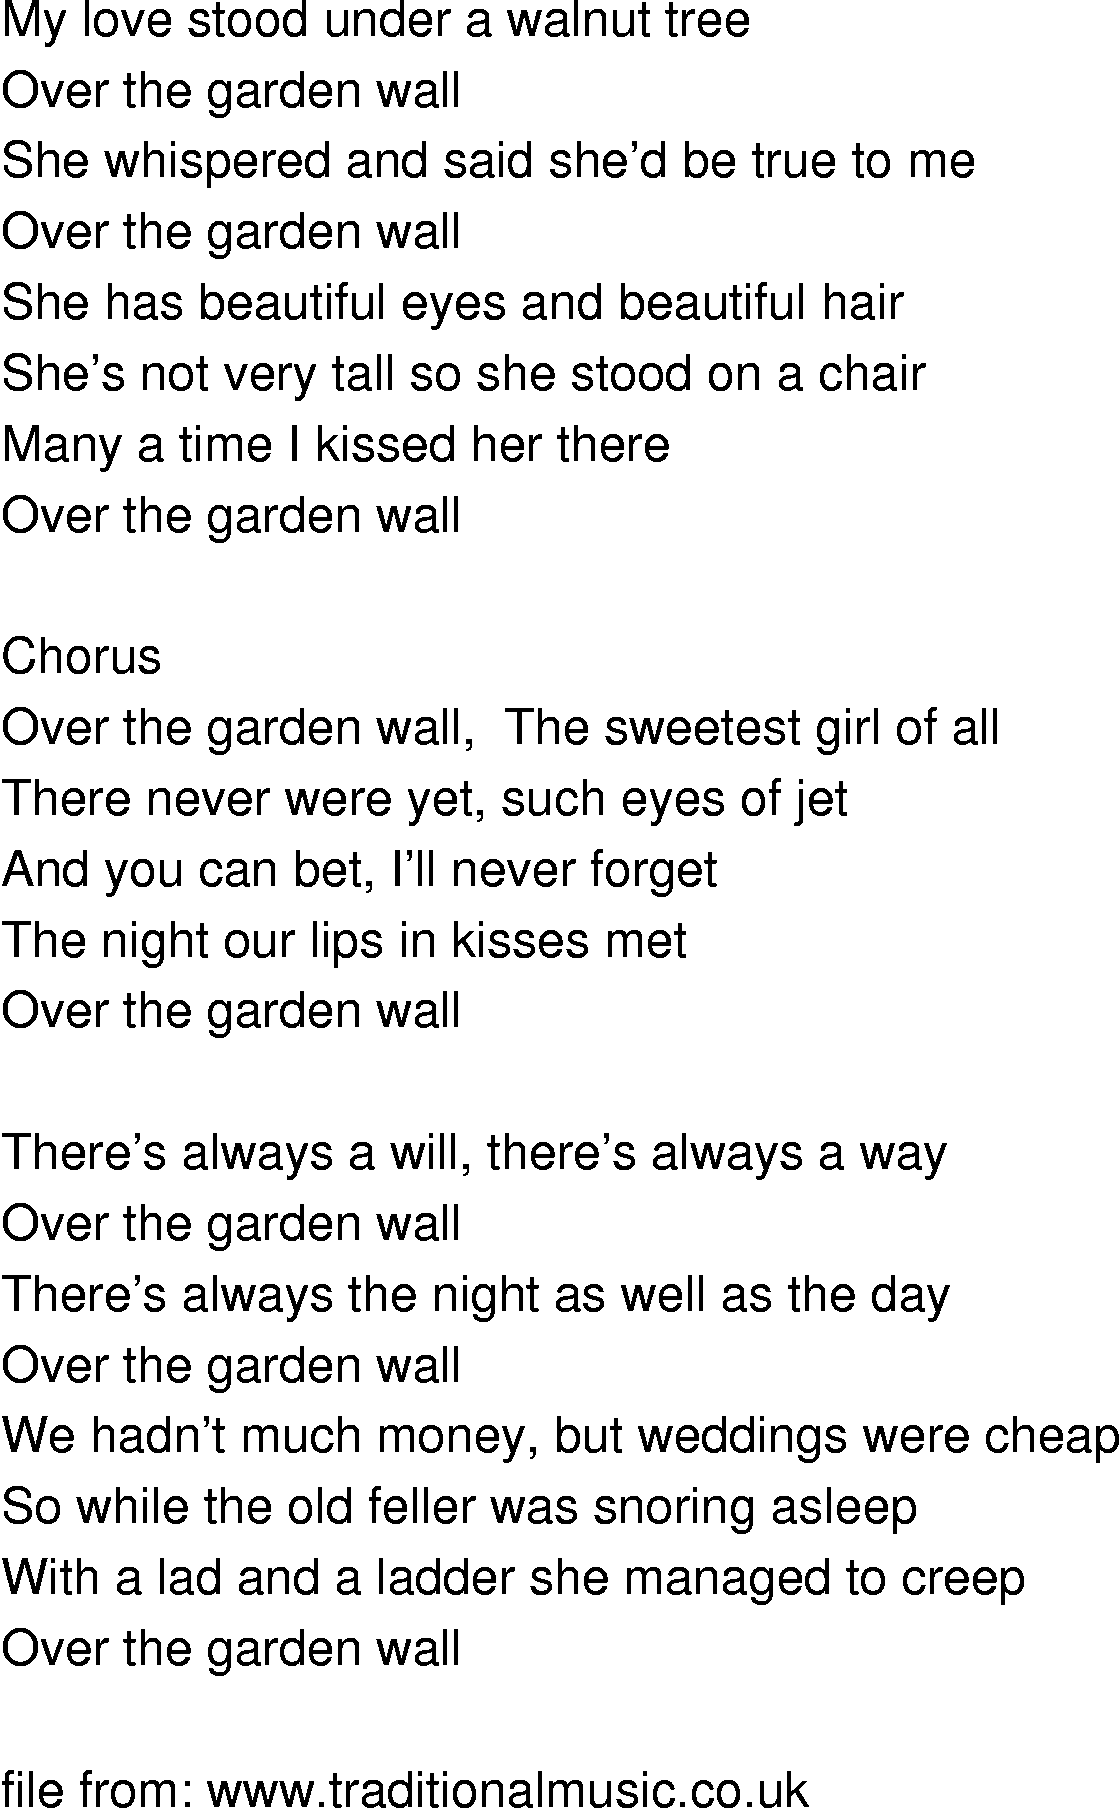 Old-Time (oldtimey) Song Lyrics - over the garden wall